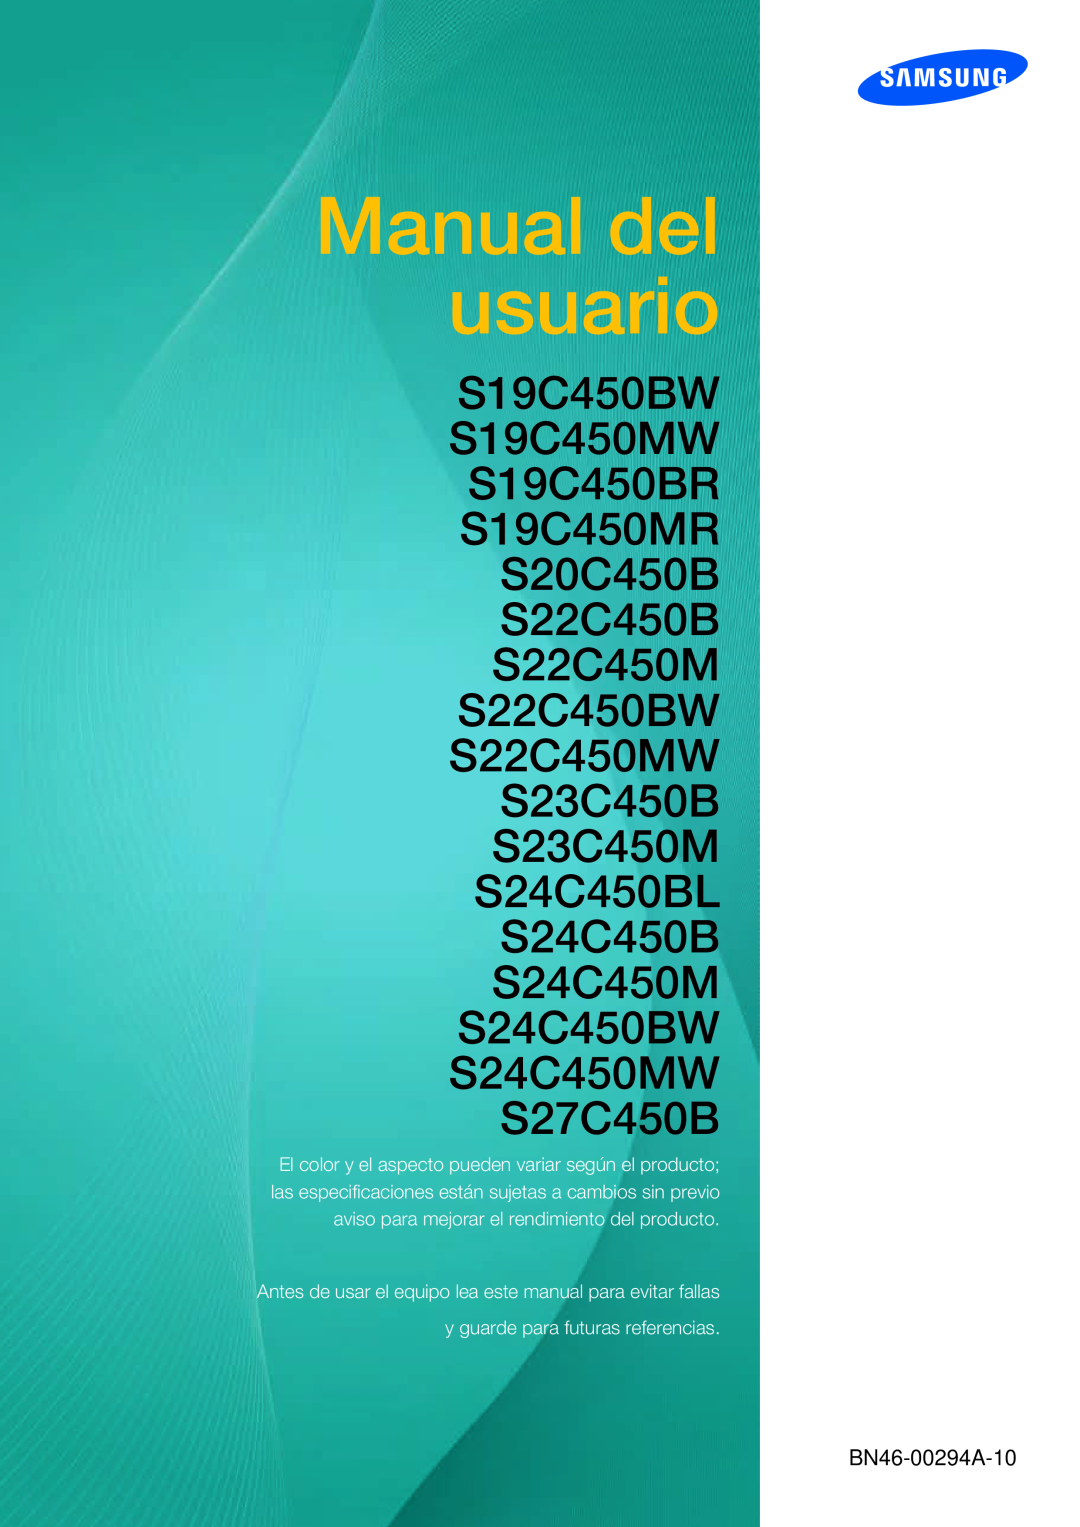 Samsung LS19C45KMWV/EN manual Manual del usuario, S19C450BW S19C450MW S19C450BR S19C450MR S20C450B S22C450B S22C450M 